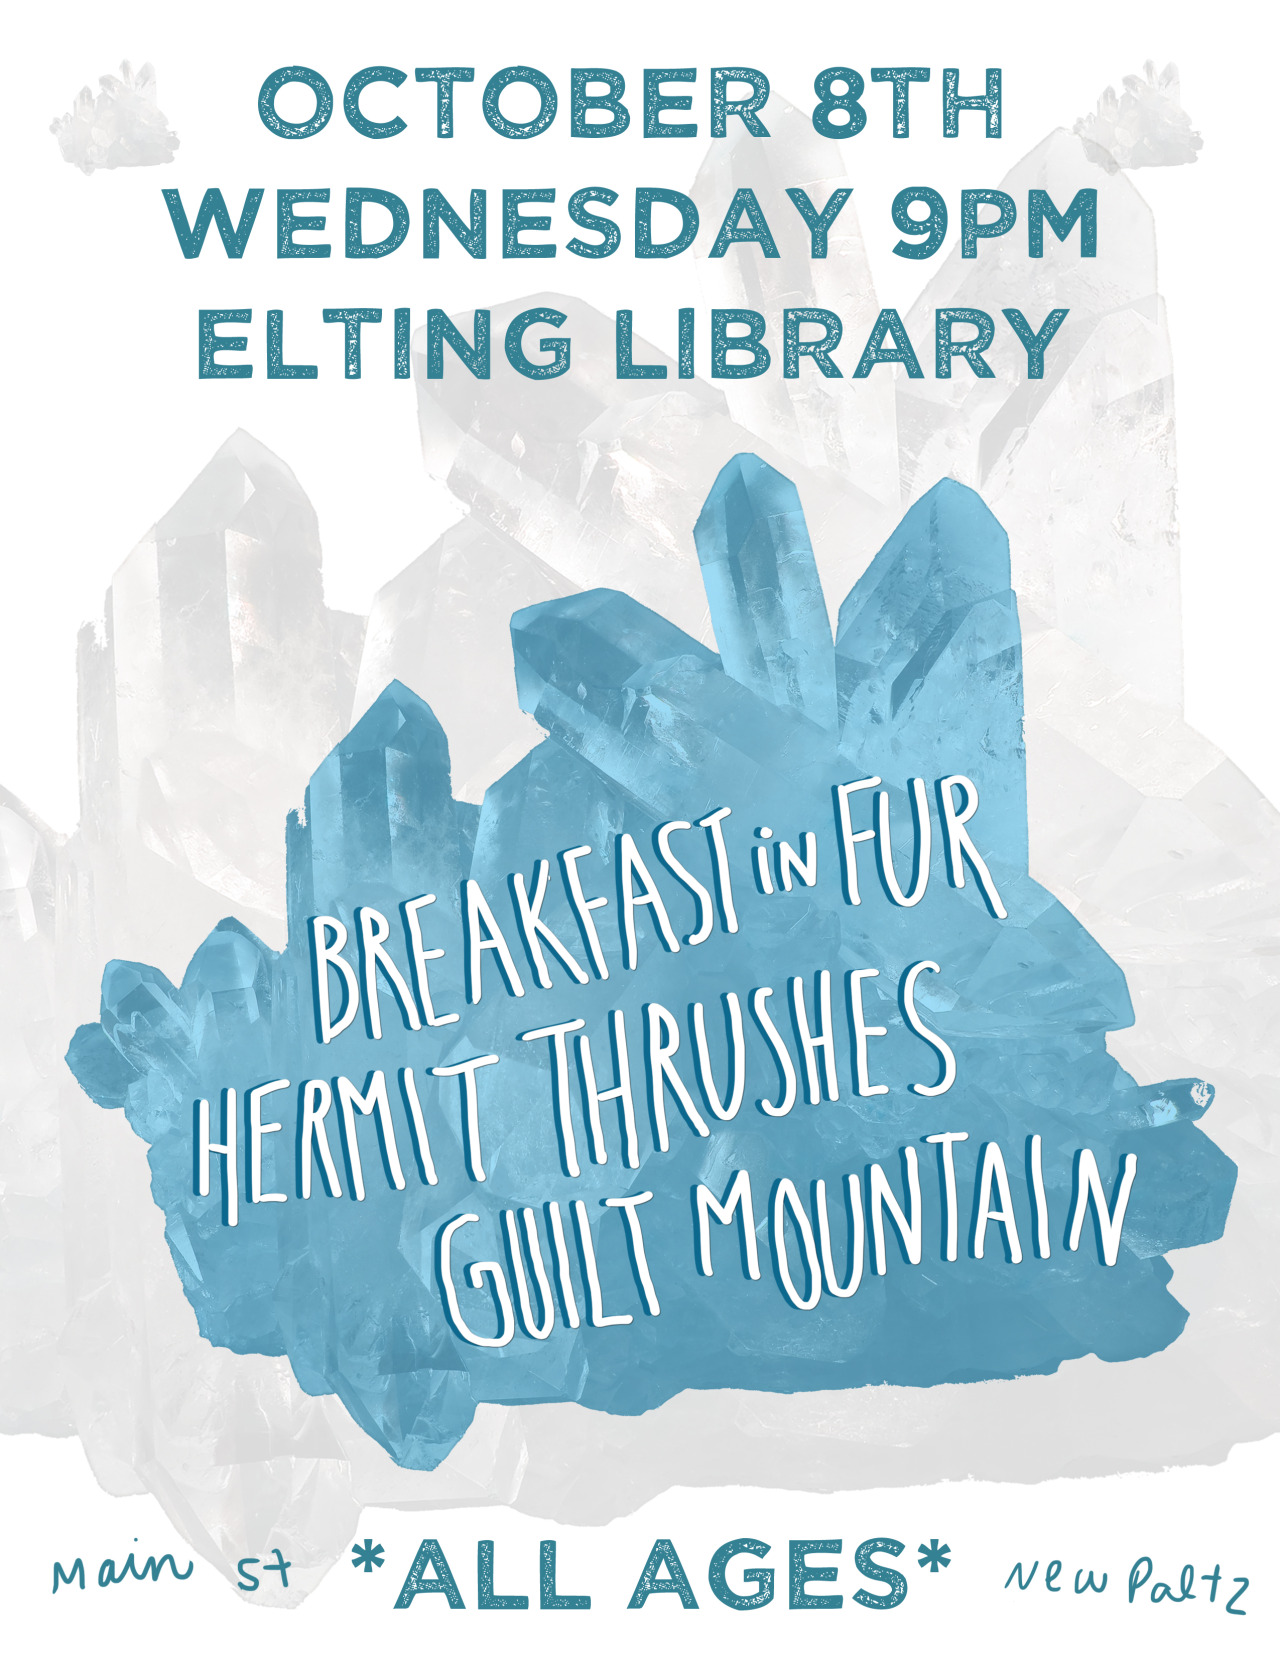 Wednesday - Breakfast in Fur / Guilt Mountain / Hermit Thrushes ! 9PM Main Street New Paltz, NY. RSVP